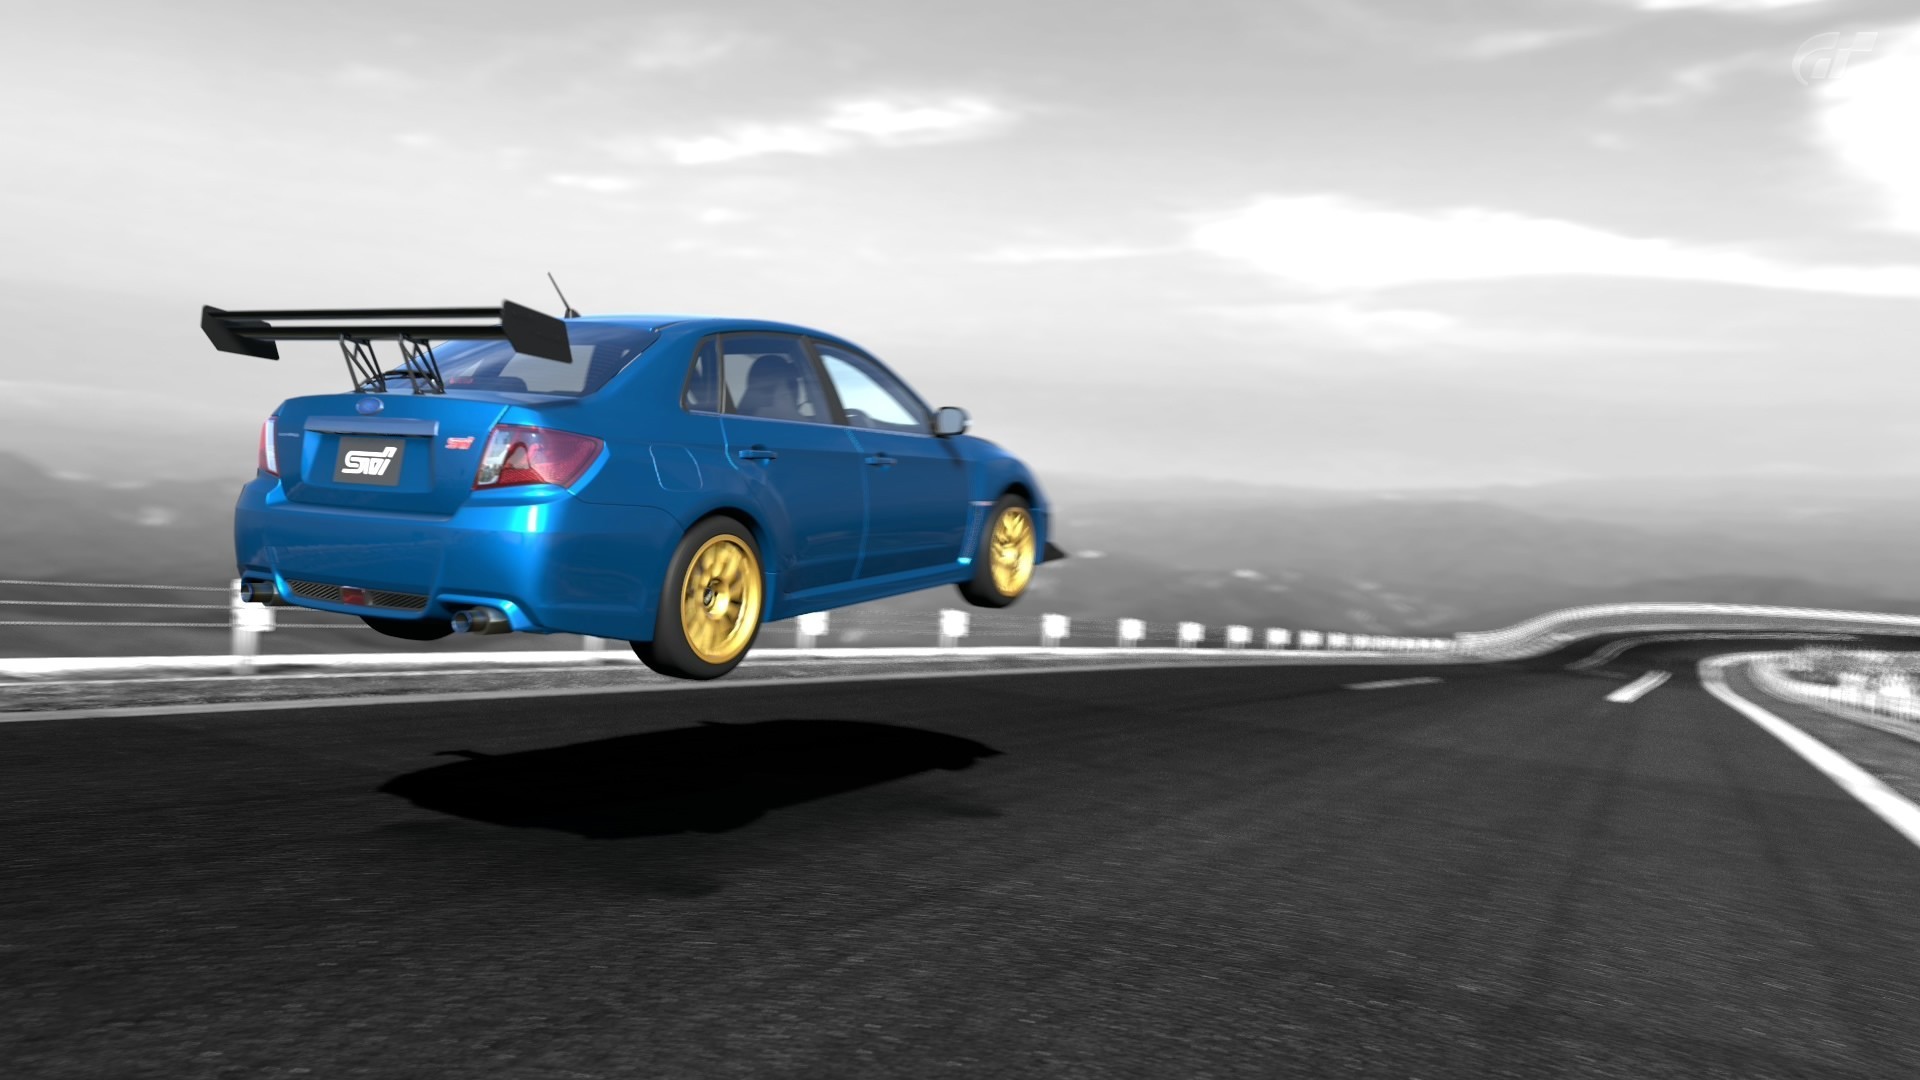 Subaru Impreza Wrx Sti Cars Video Games Wallpaper